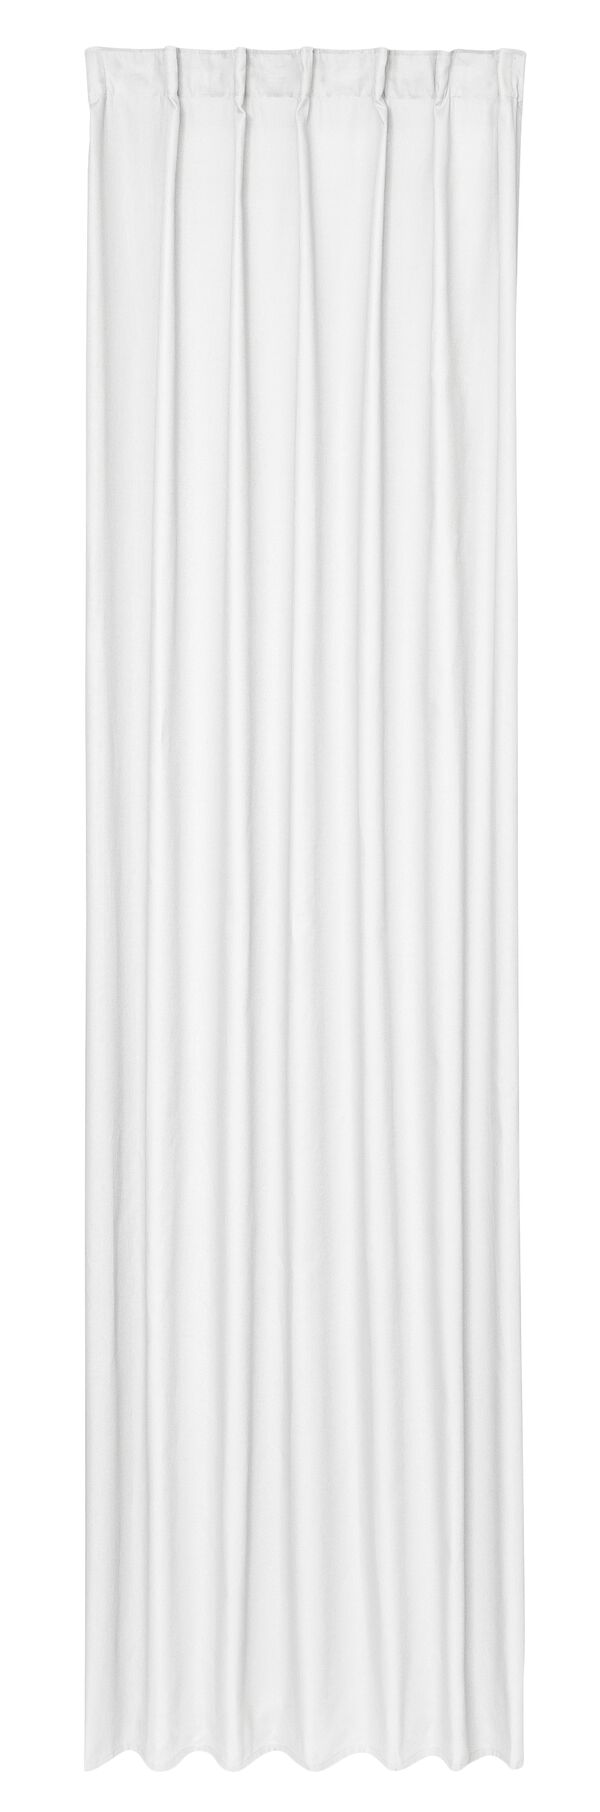 rideau prêt-à-poser avec ruban plisseur blanc - 7632119 - HEMA